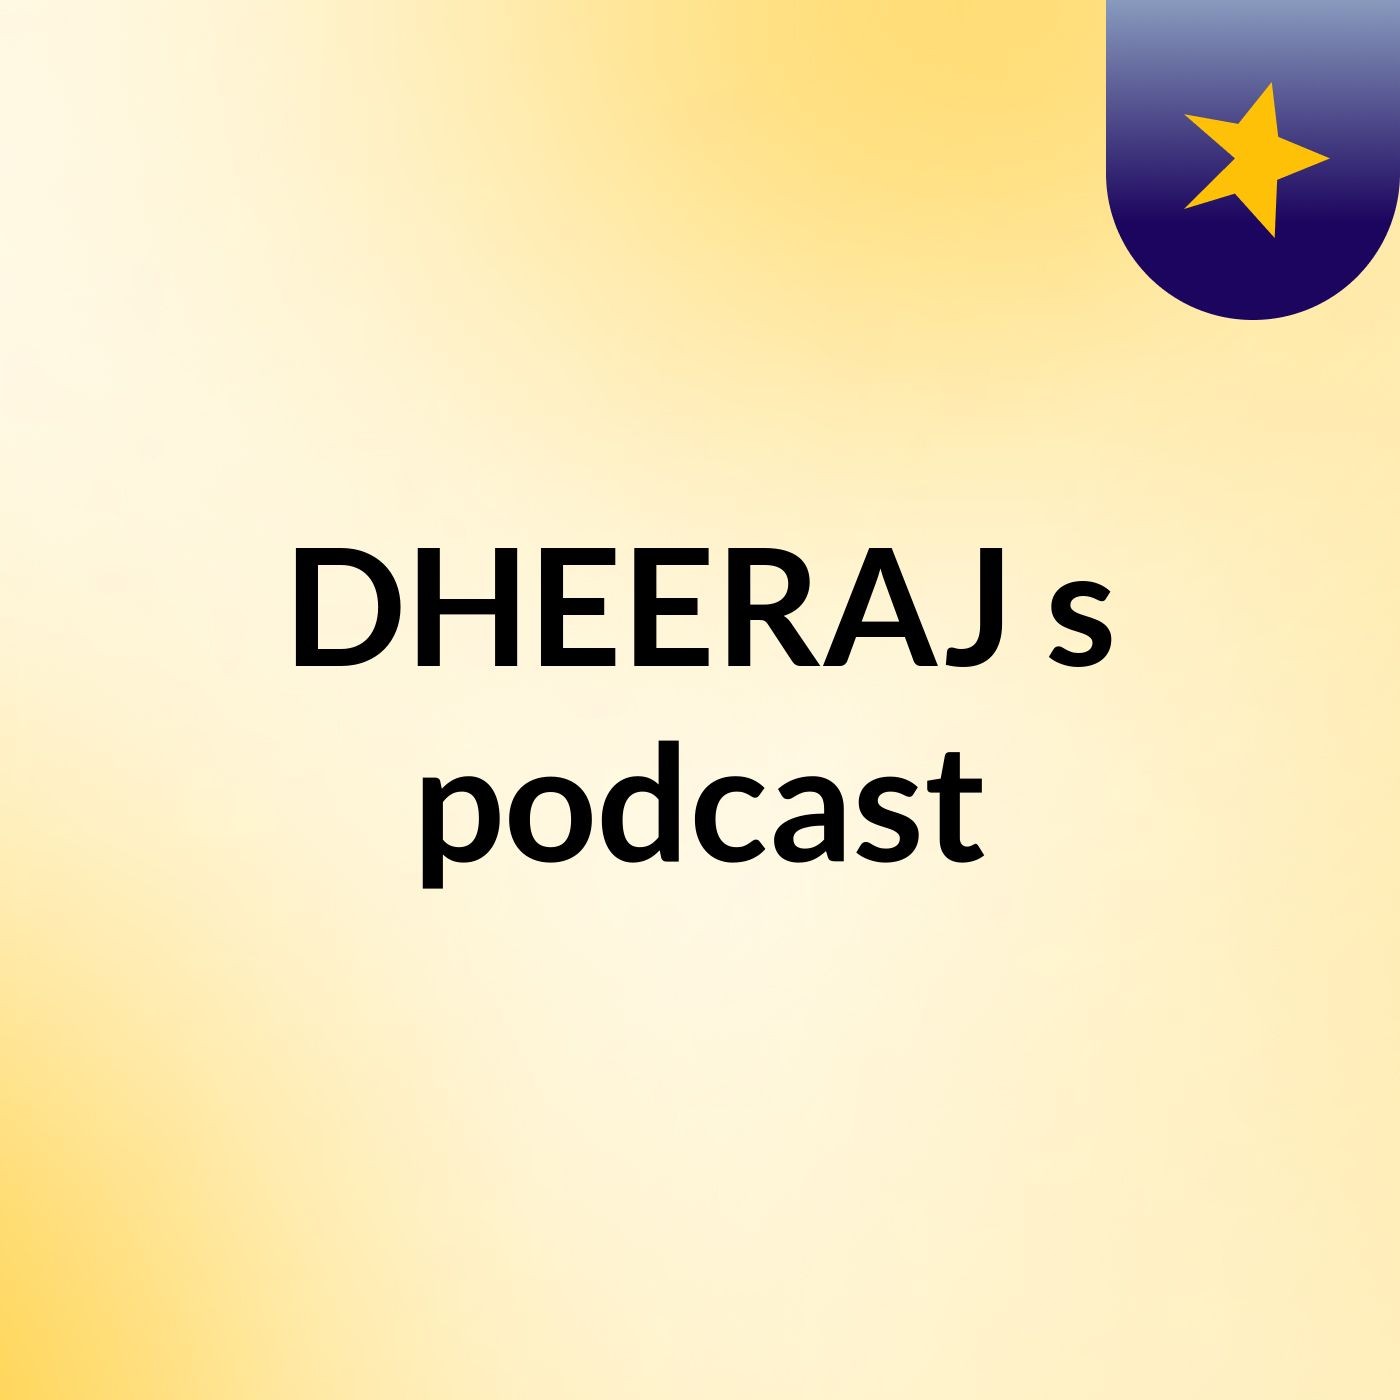 DHEERAJ's podcast